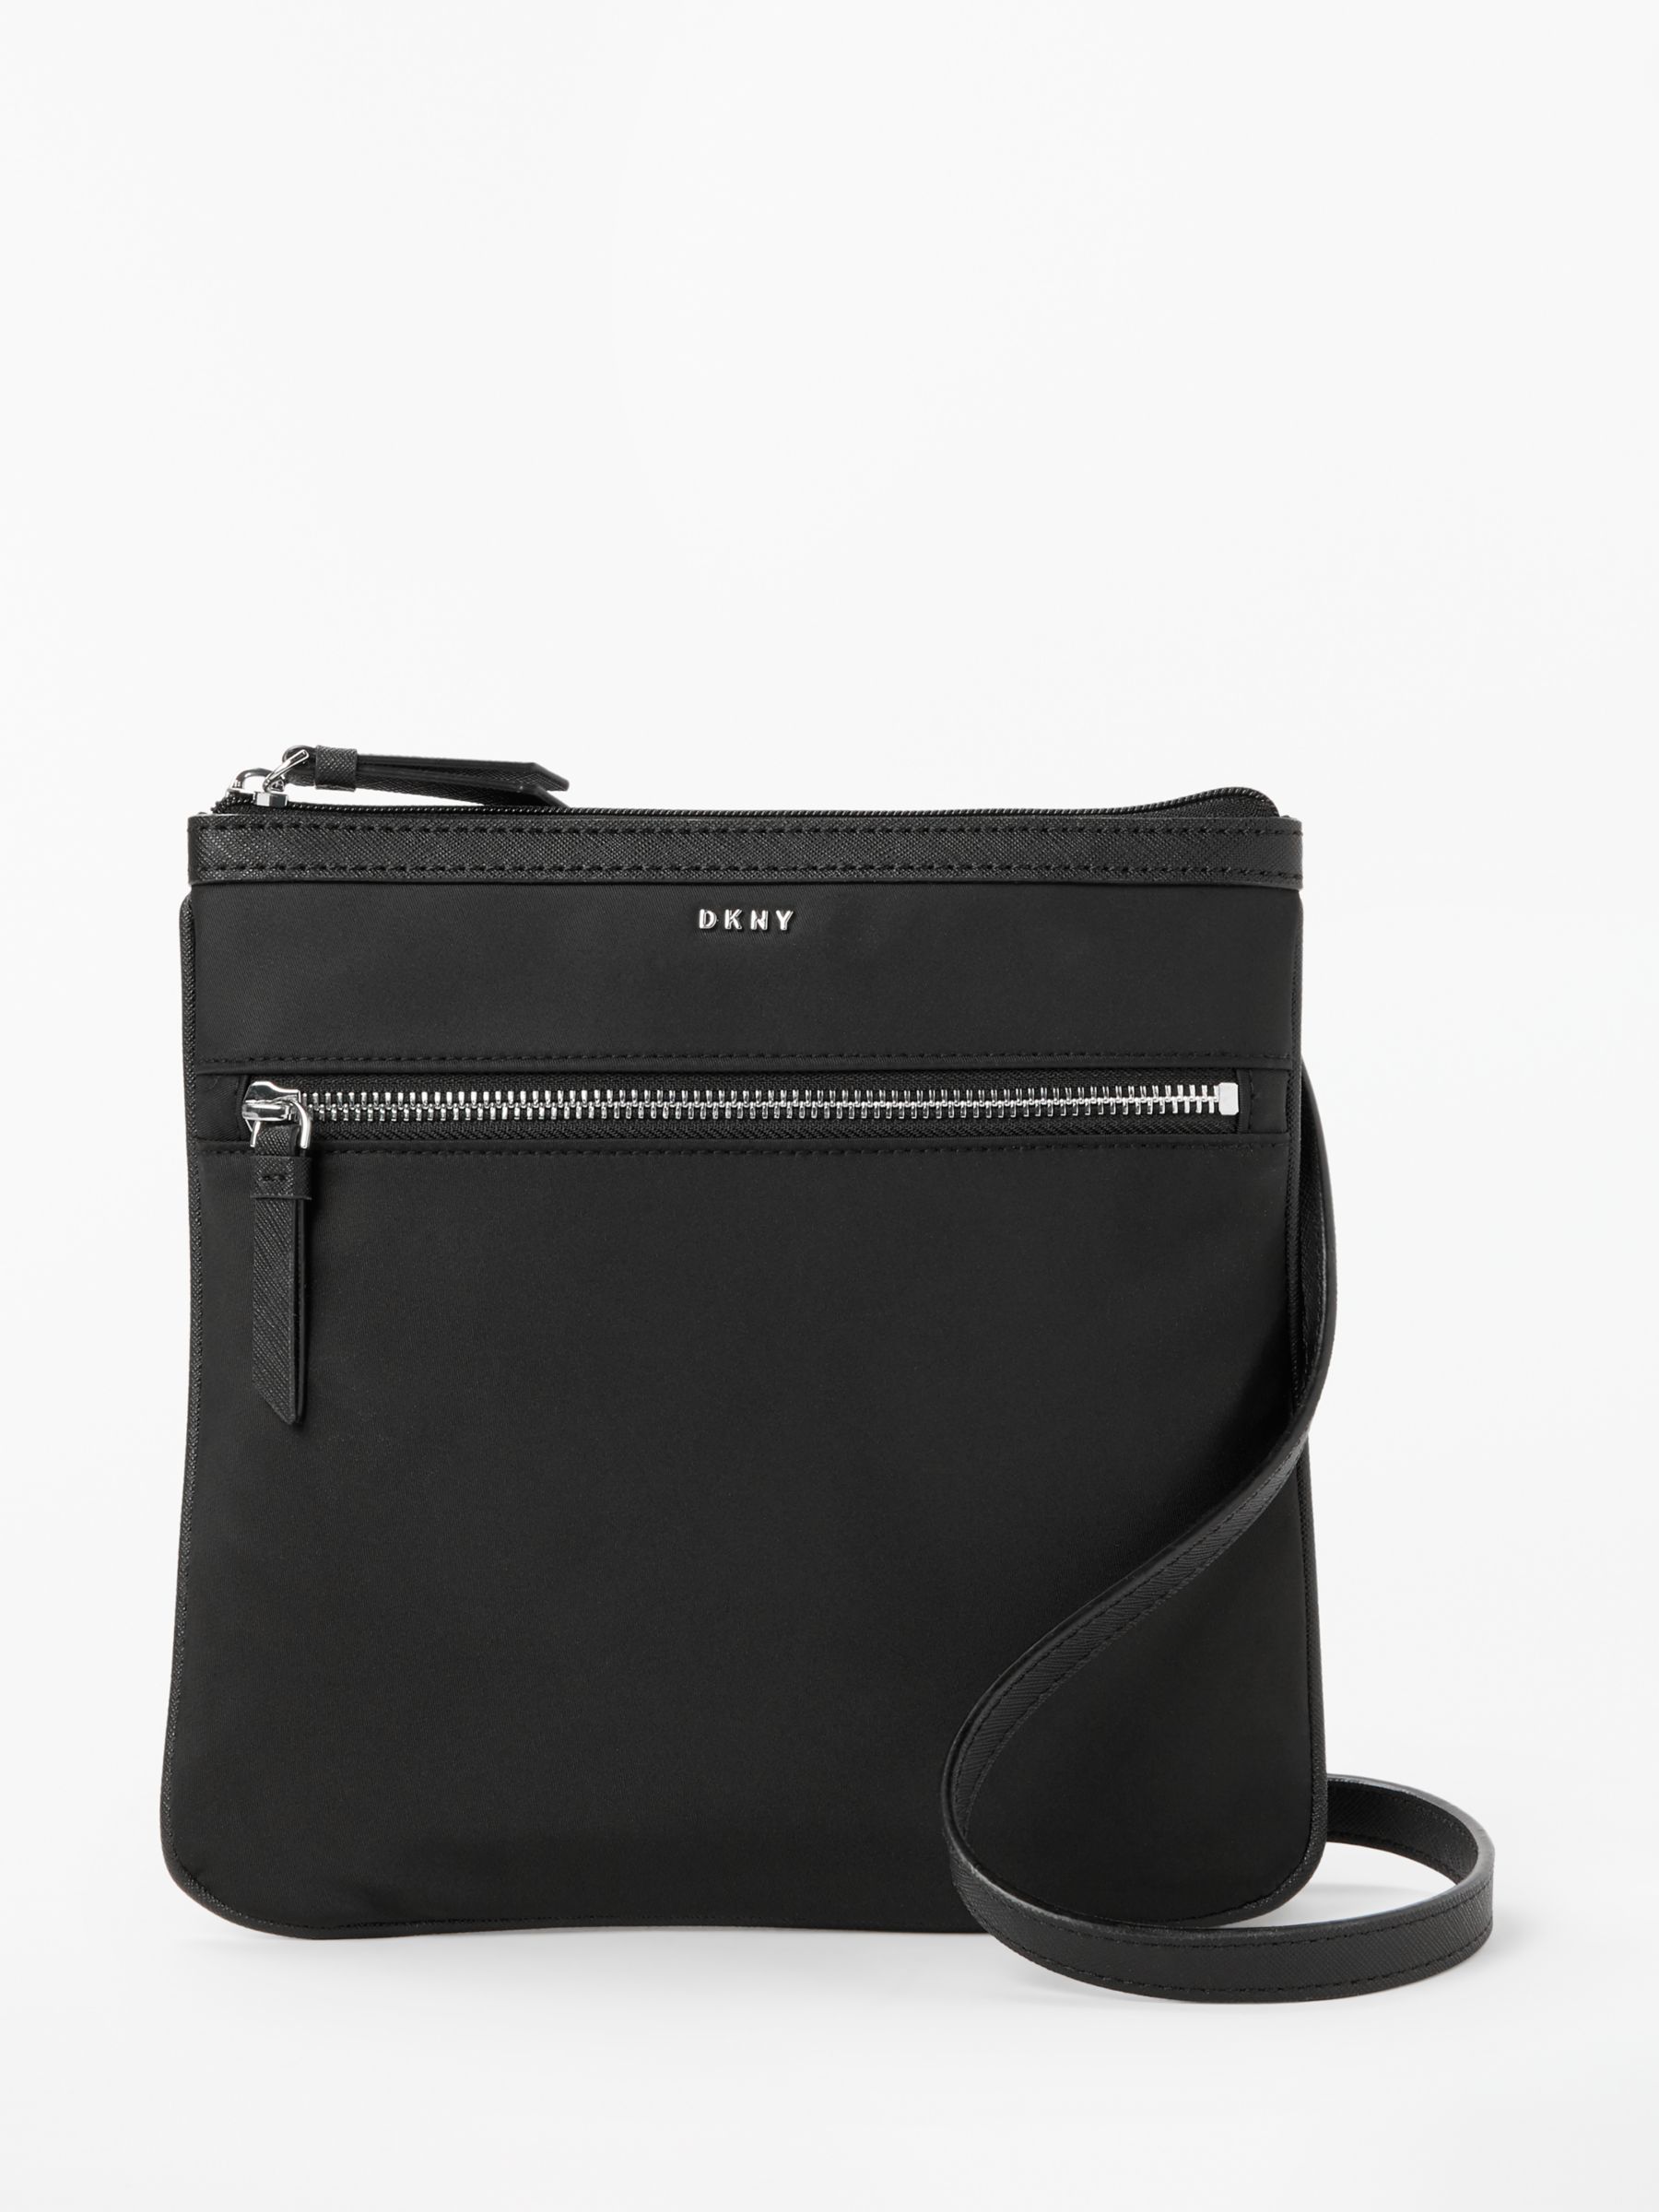 DKNY Casey Zip Top Cross Body Bag, Black